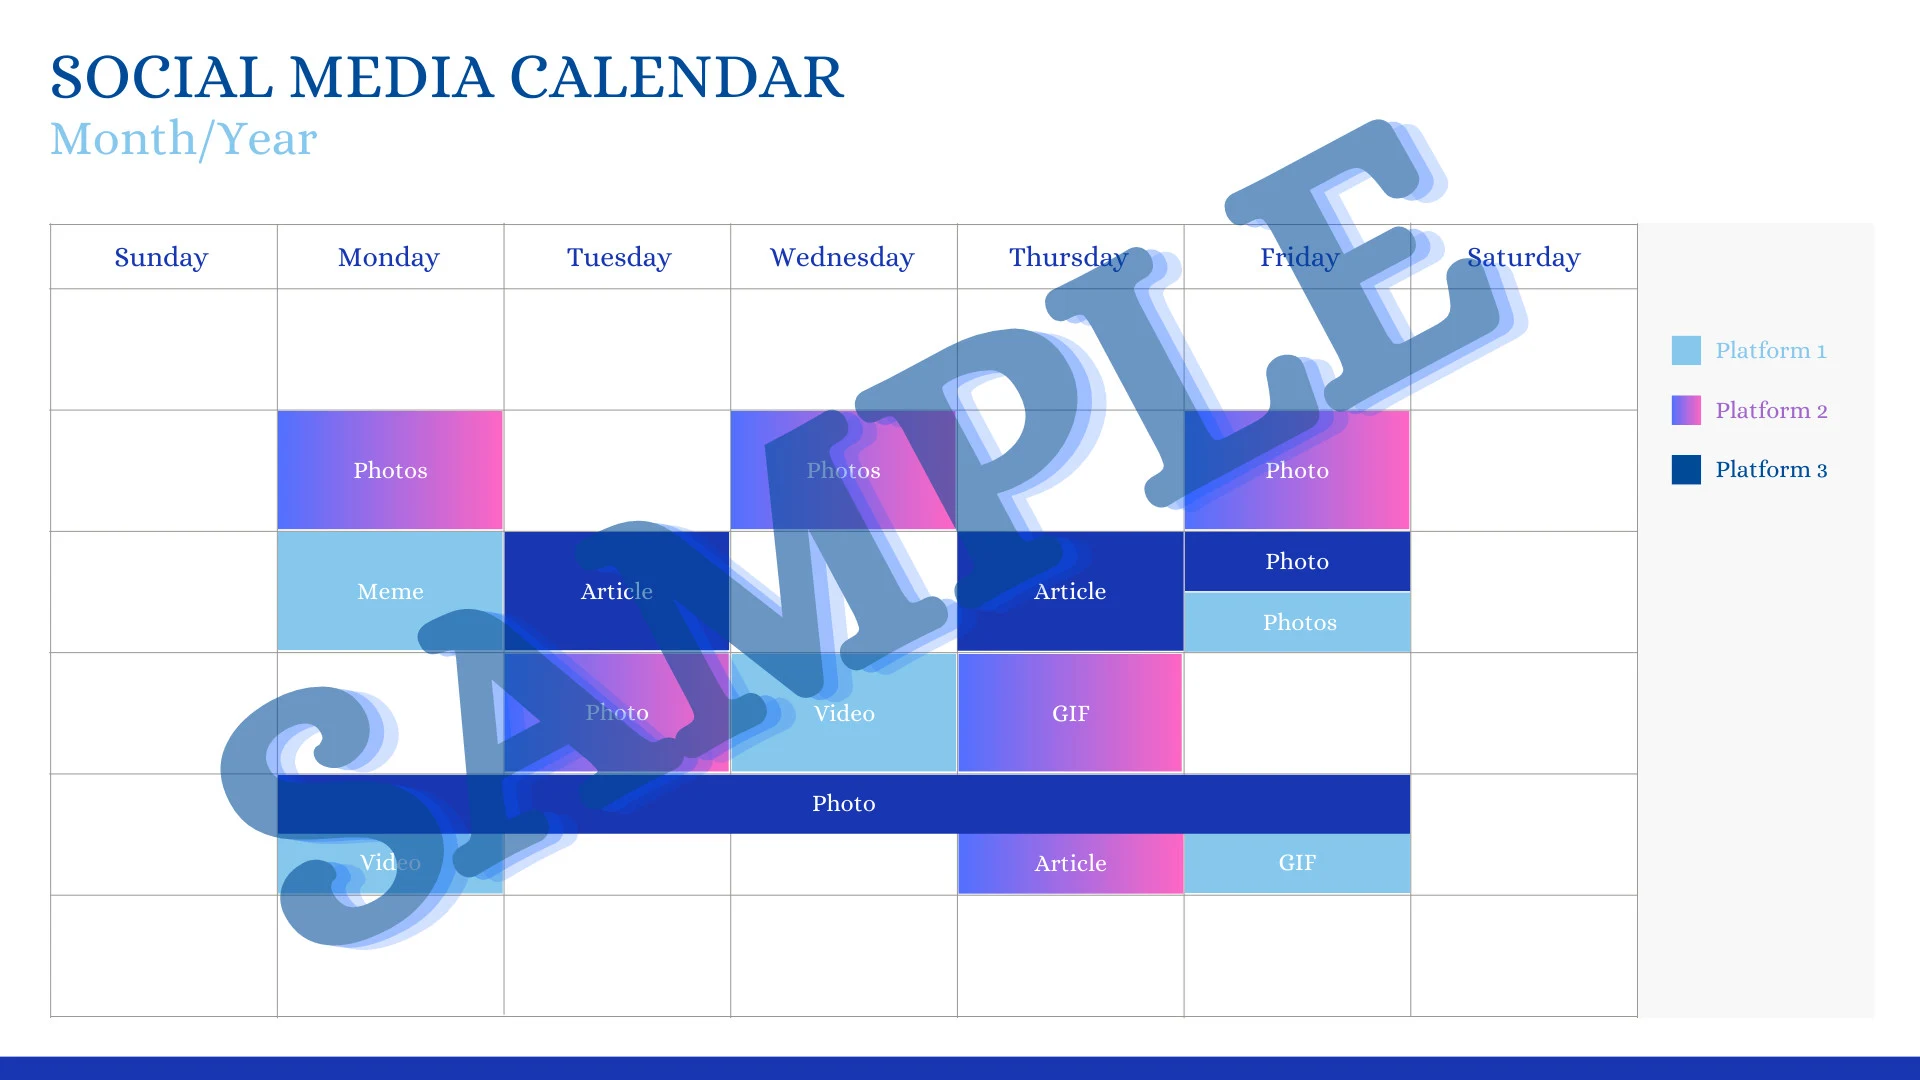 A sample of a social media calendar is shown.